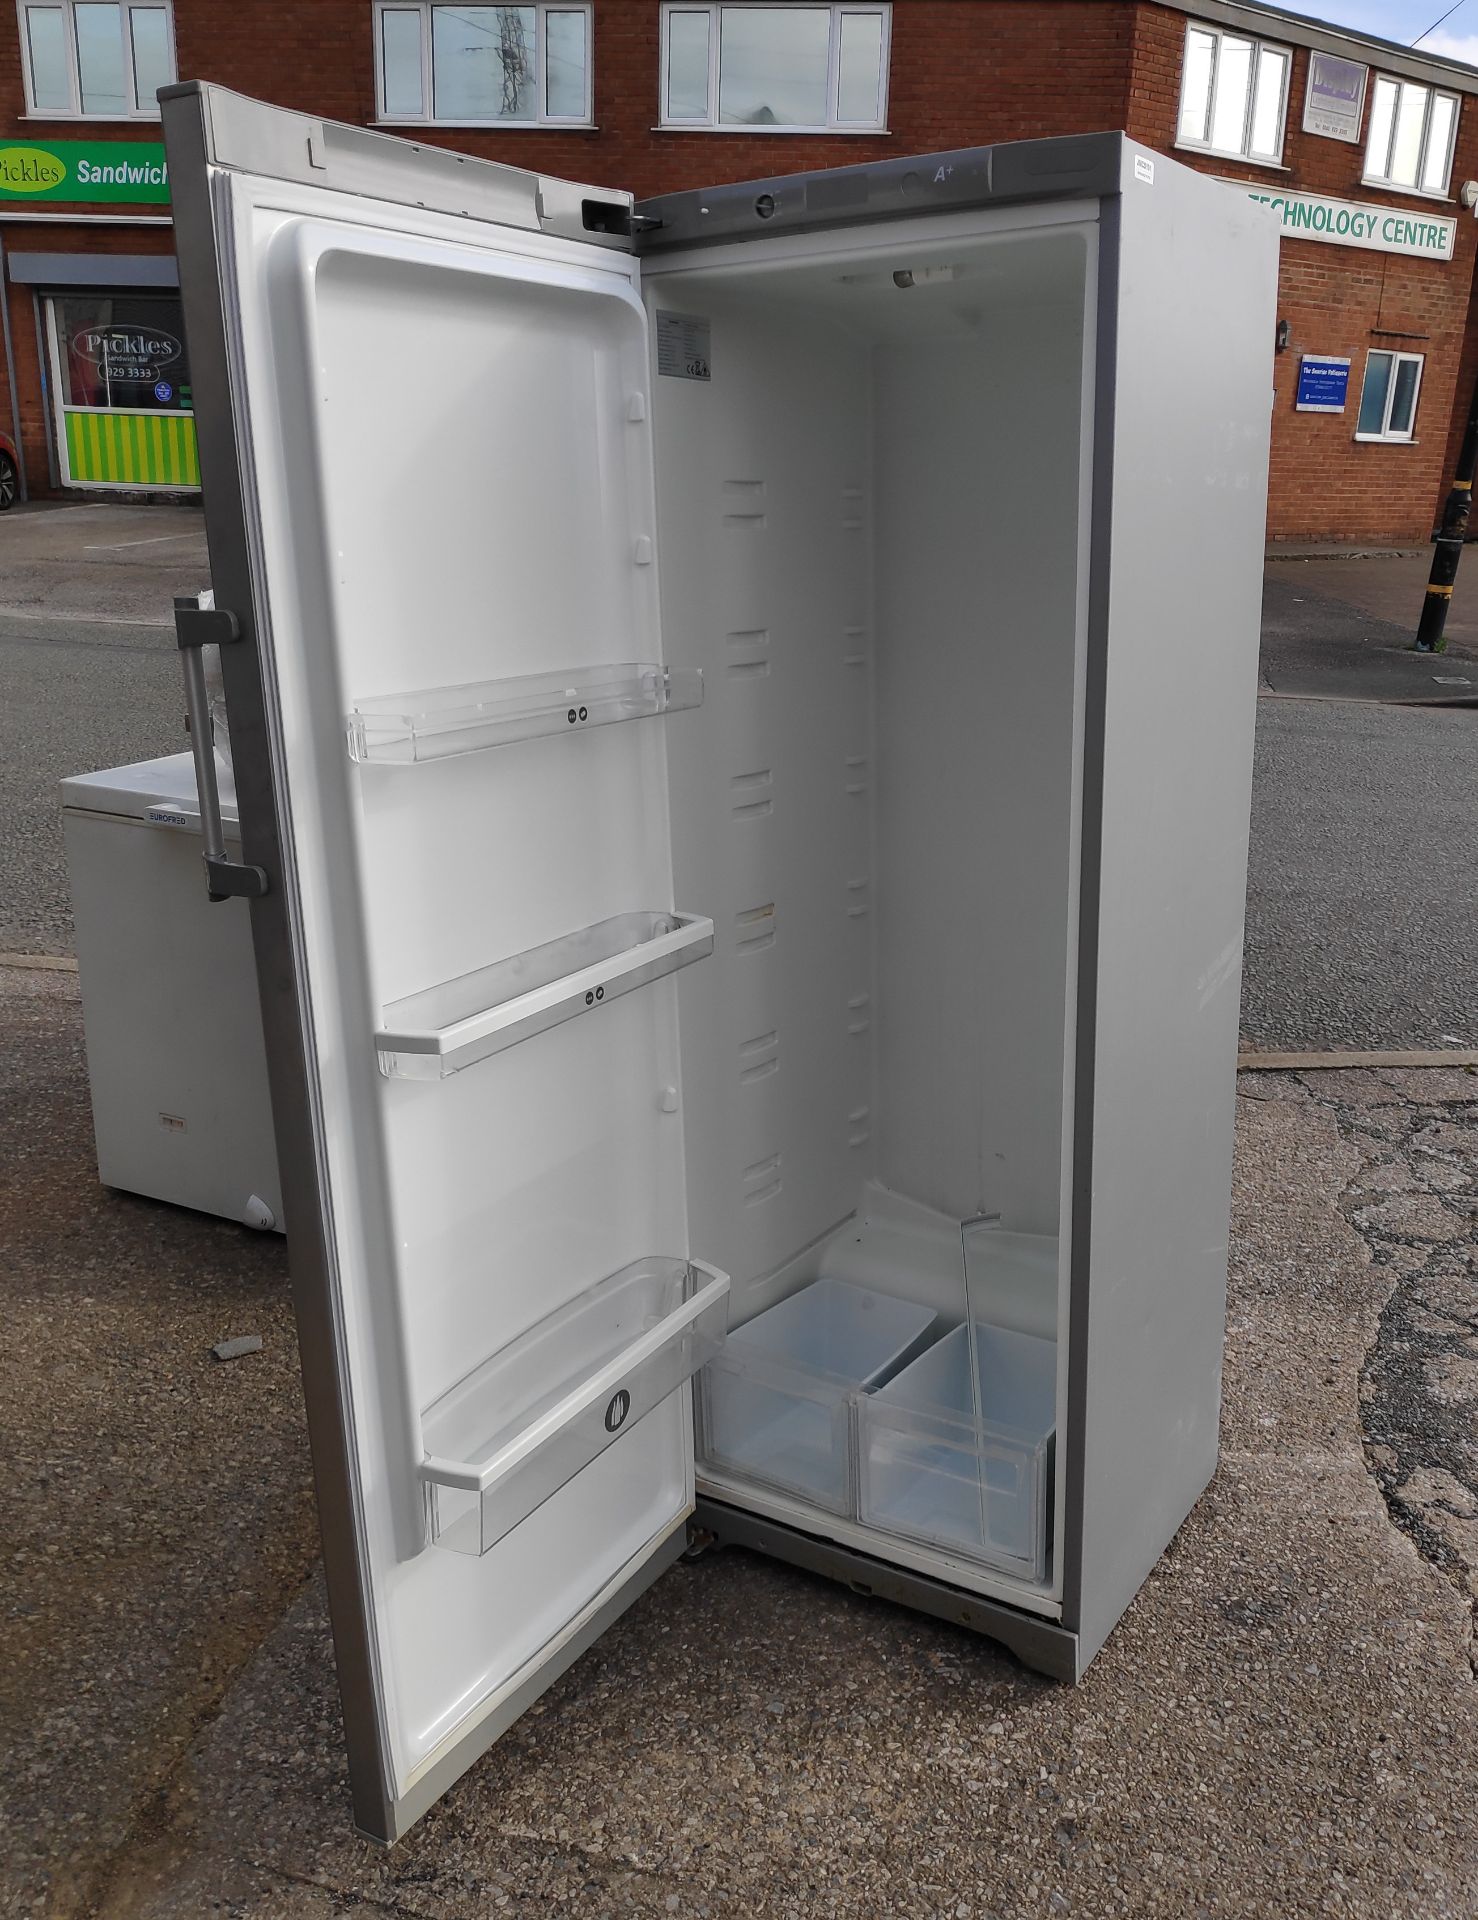 1 x Eurofred 340l Upright Refrigerator - Model MC350A+S - JMCS101 - CL723 - Location: Altrincham - Image 11 of 11